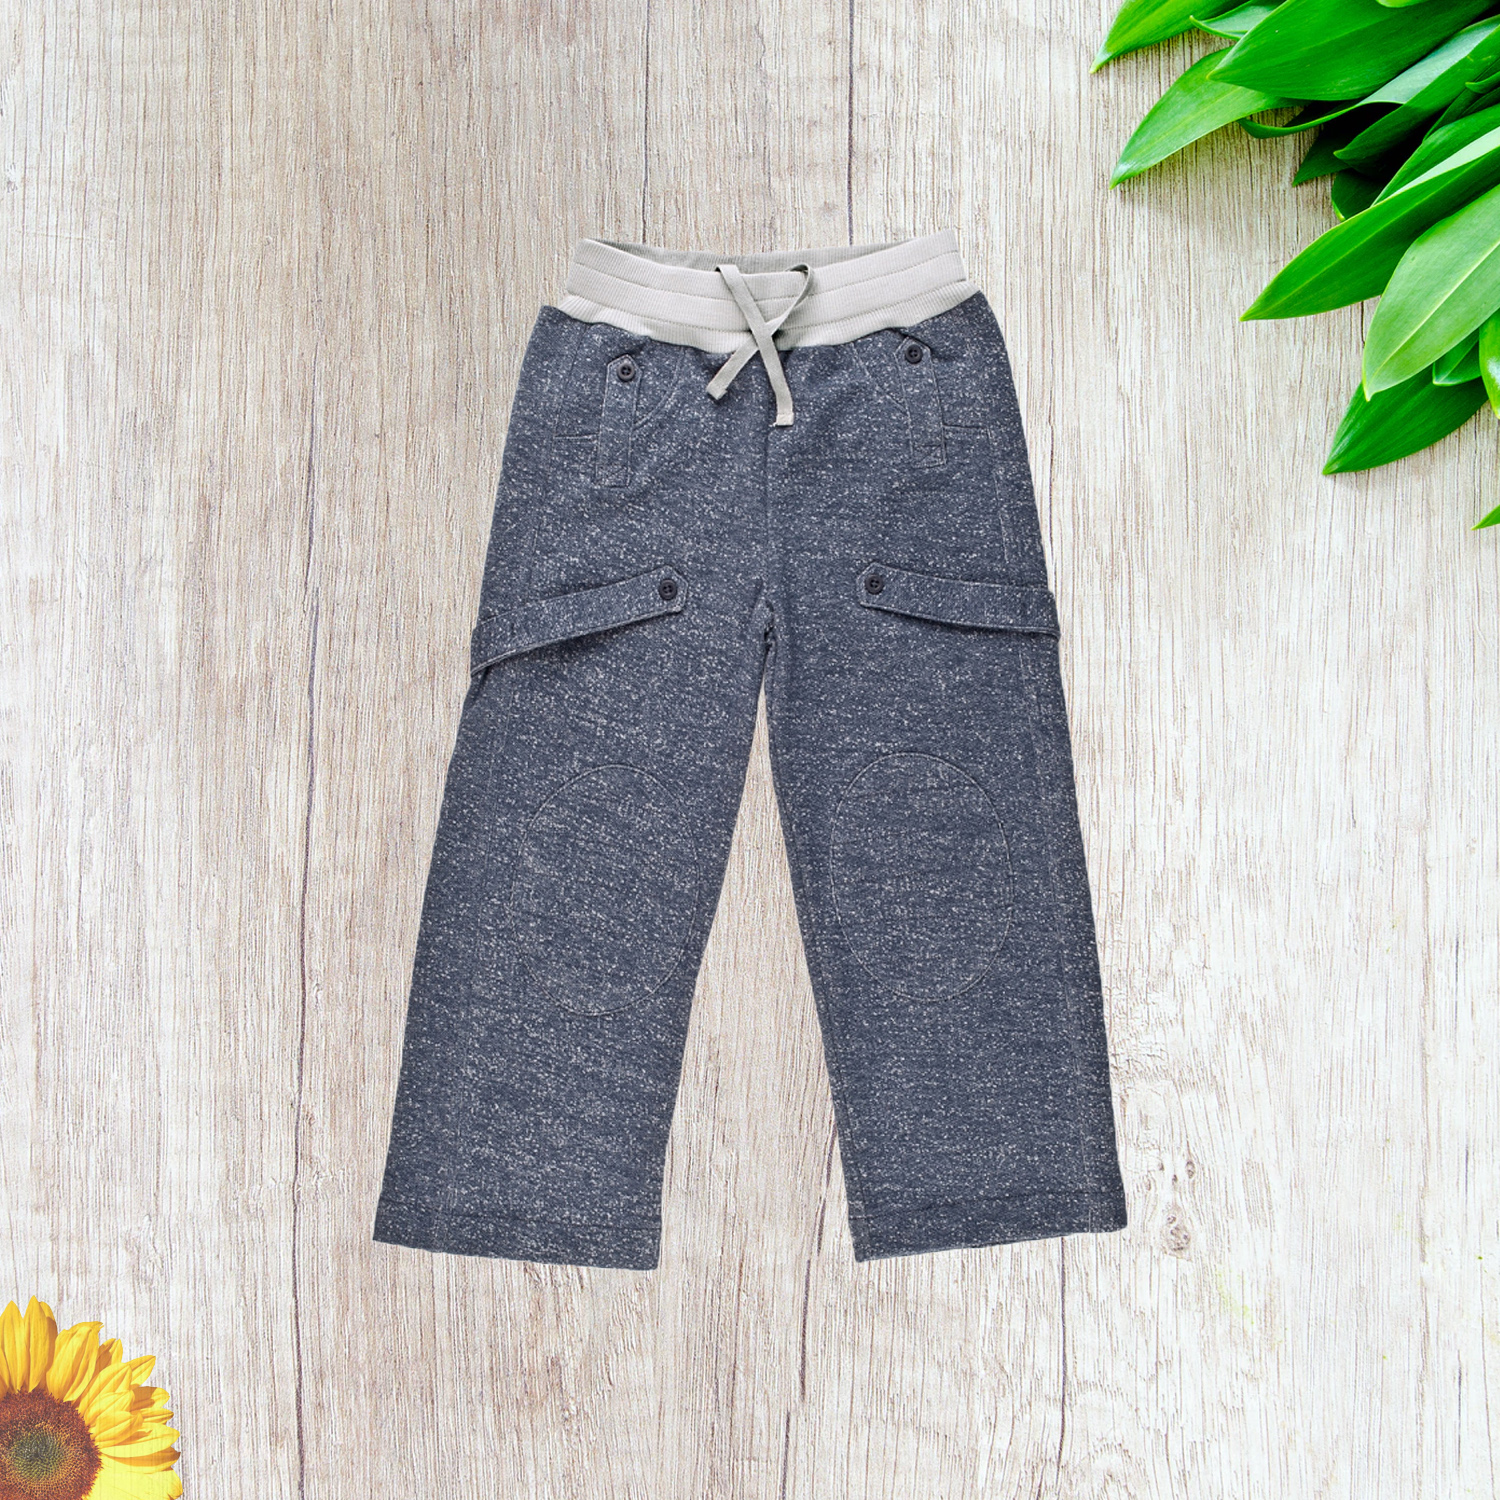 Kidsy Boys Casual Denim-Looking Pants – Knee Patches, Soft Cotton,  Pull-On/Drawstring Closure, Dark Denim, 8